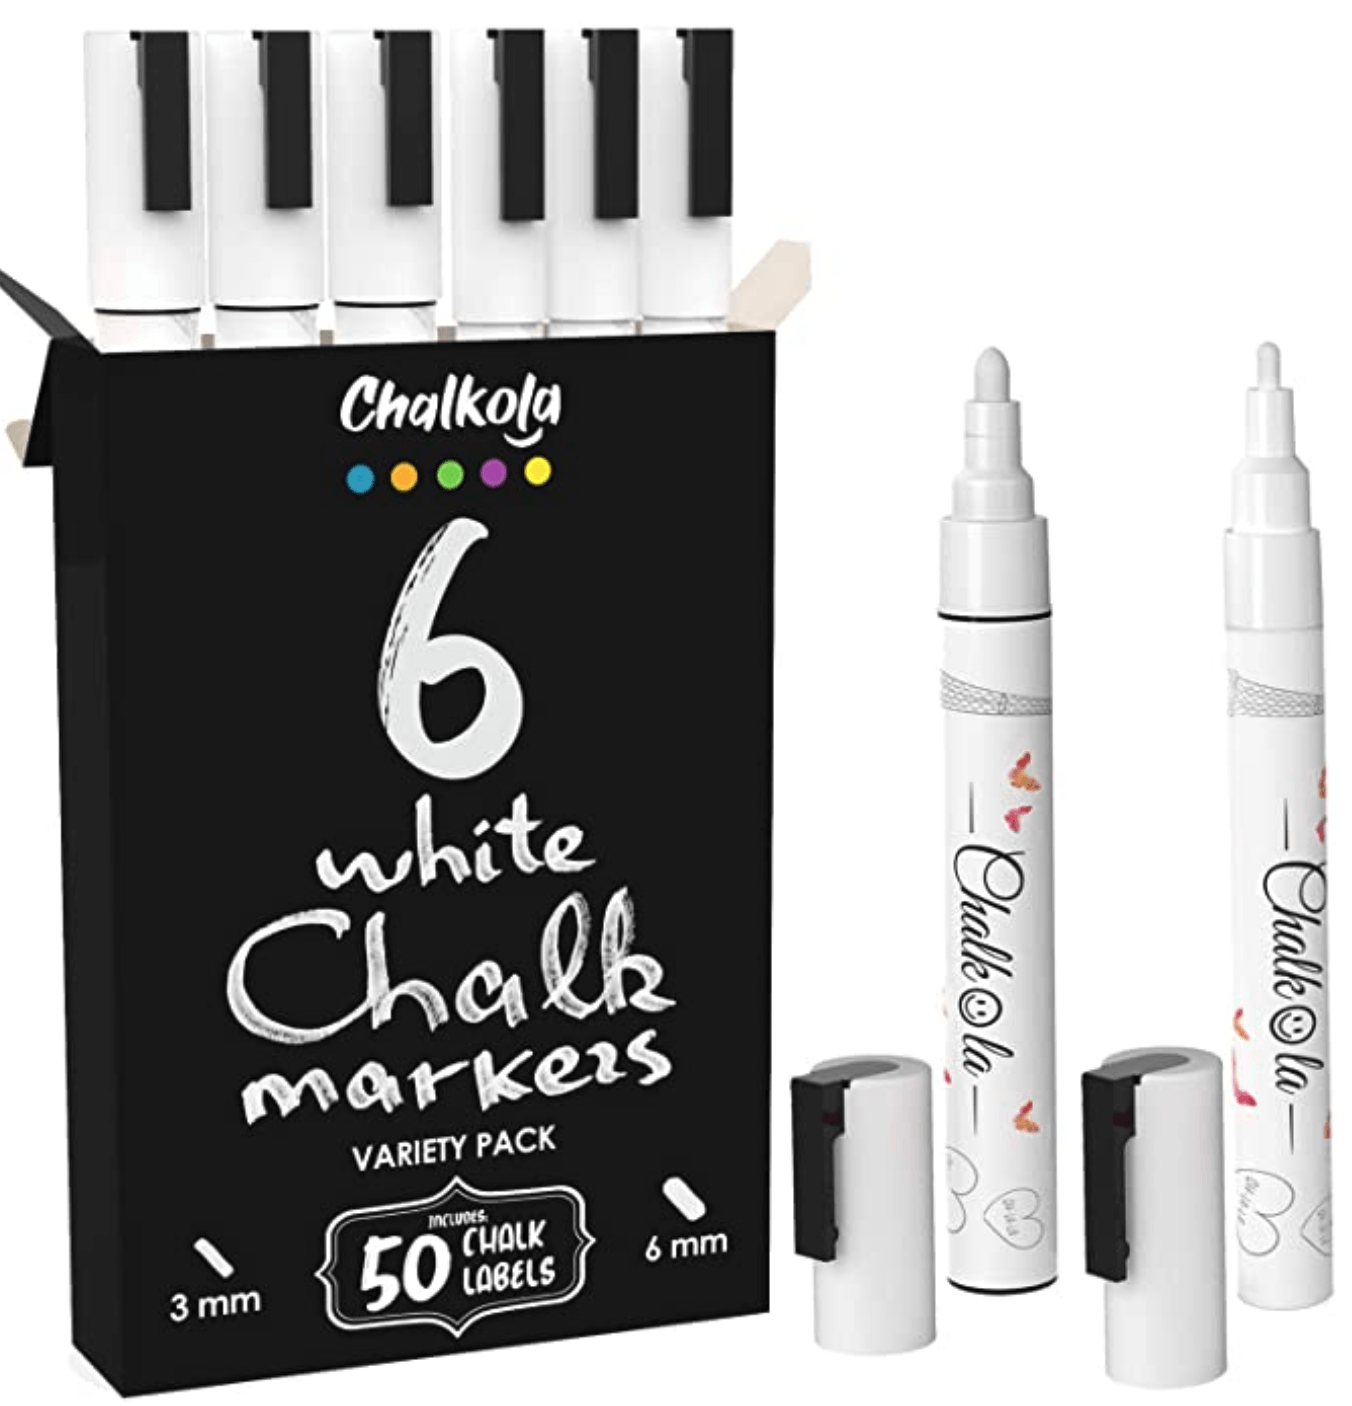 ArtShip Design 14 Vintage Colors Chalk Markers - Reversible Medium Tip Liquid Chalk Pens Wet Erasable - Menu Boards, Glass, Windows, White Boar